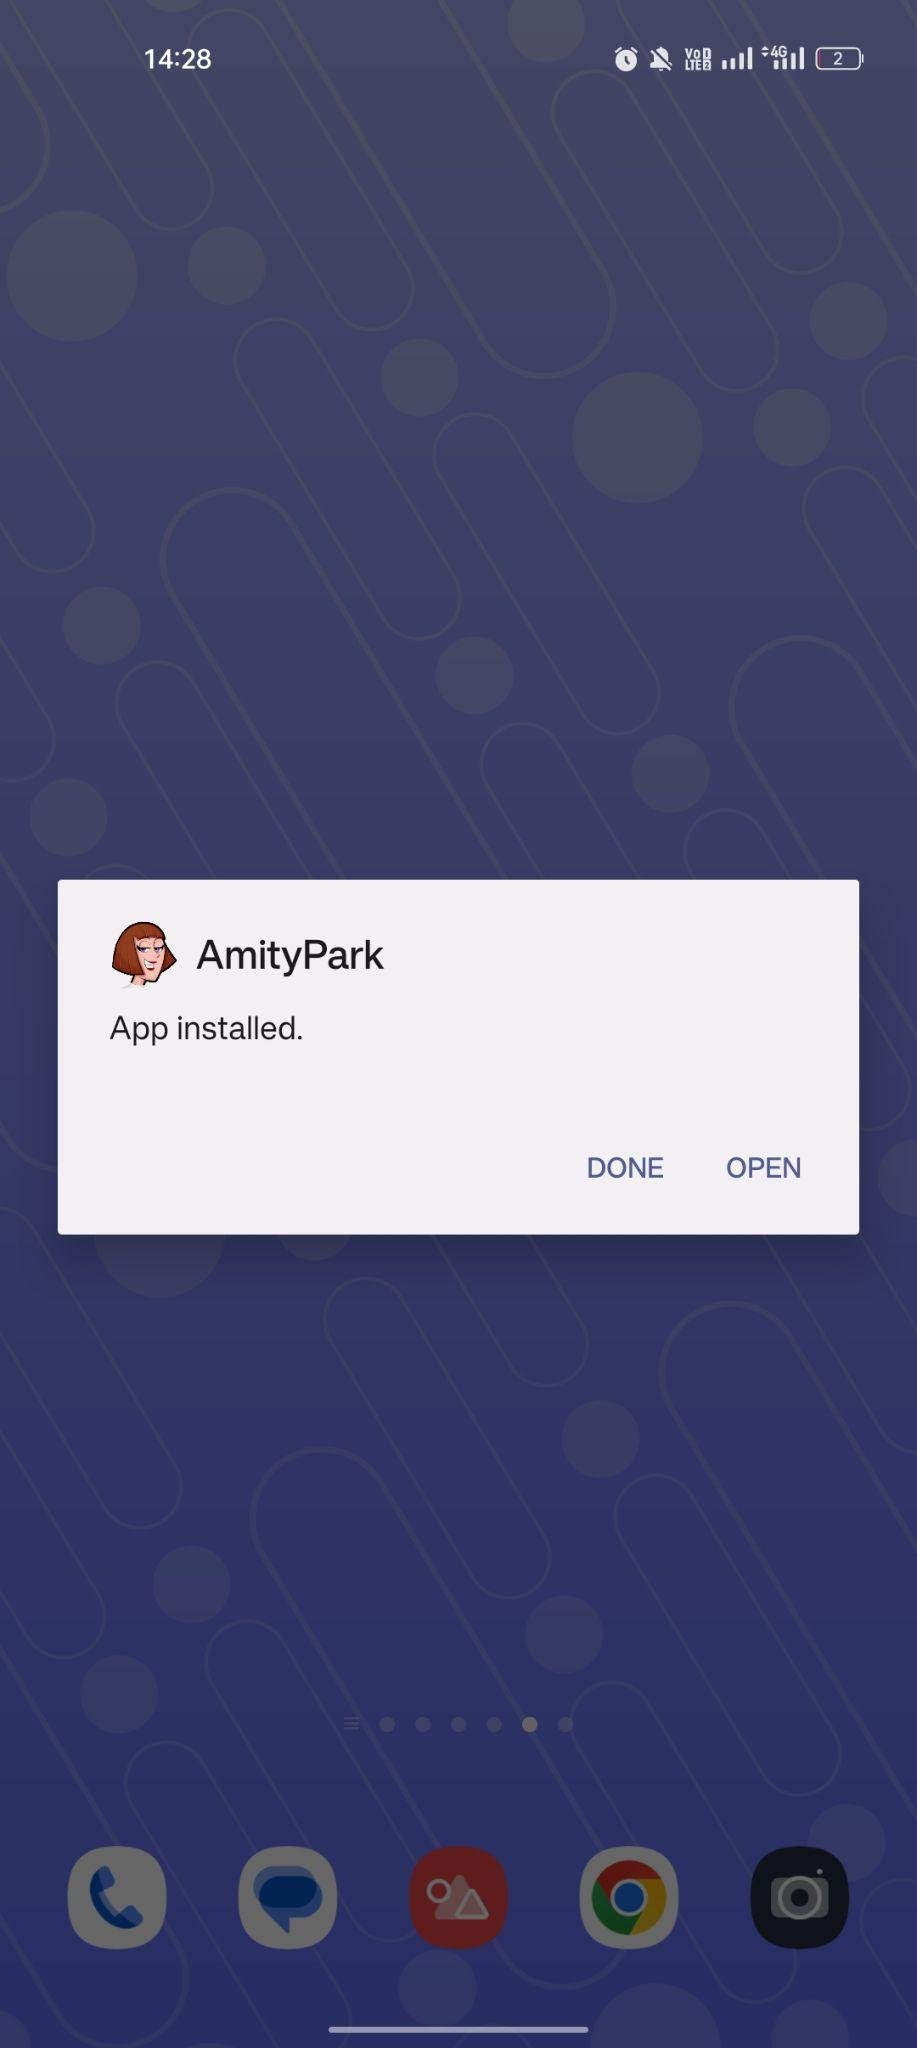 Amity Park apk installed